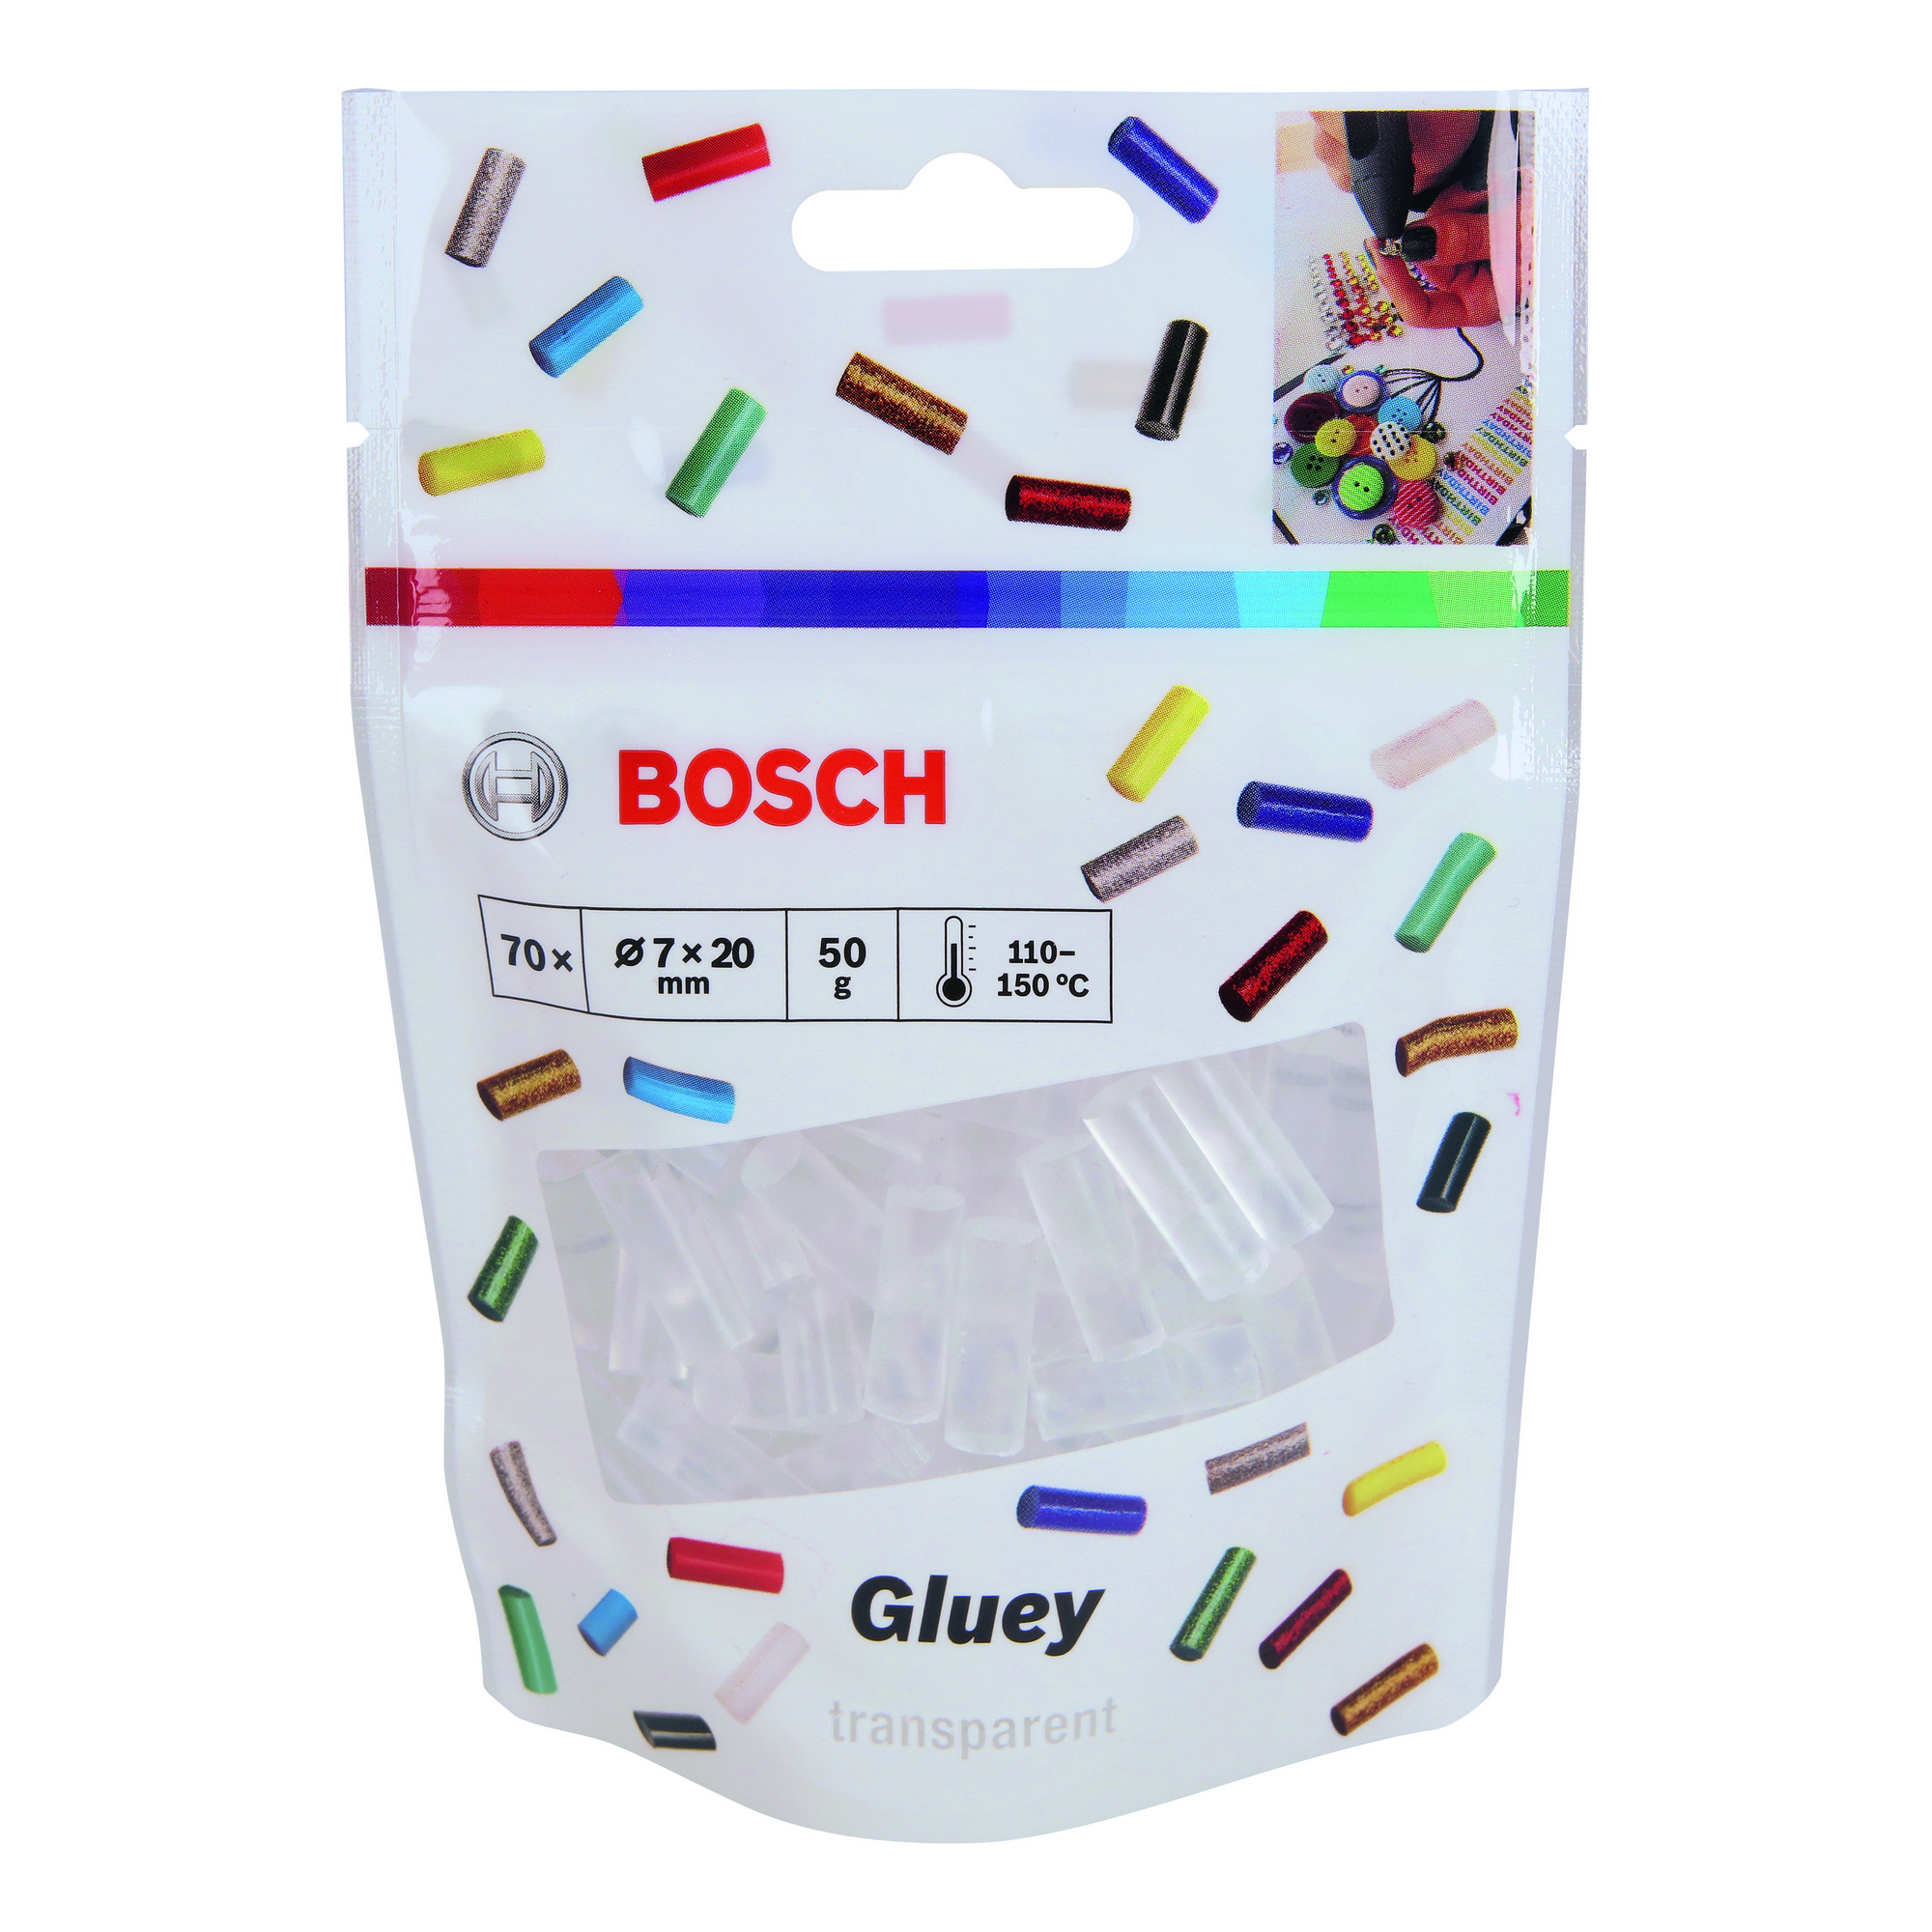 Heißklebesticks 'Gluey Tranparent' 70 Stück + product picture